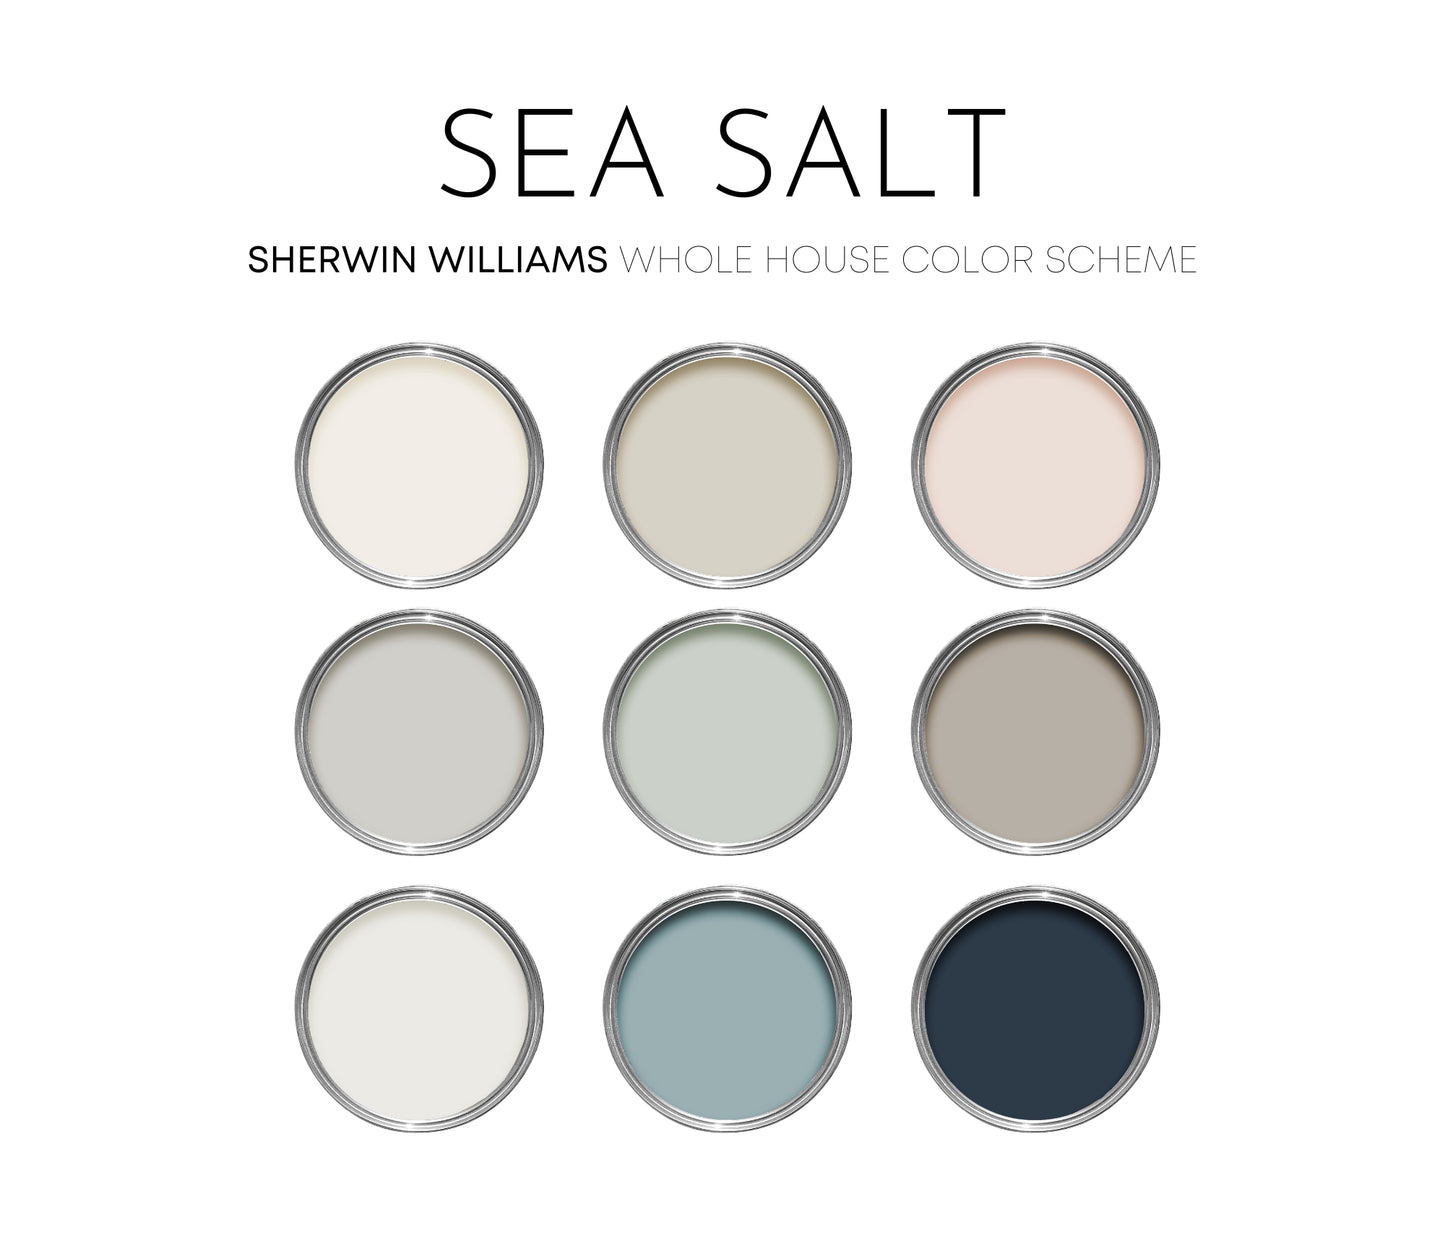 Sea Salt Sherwin Williams Paint Palette, Modern Coastal Interior Paint Colors for Home, Coastal Interior Design Color Palette, Naval